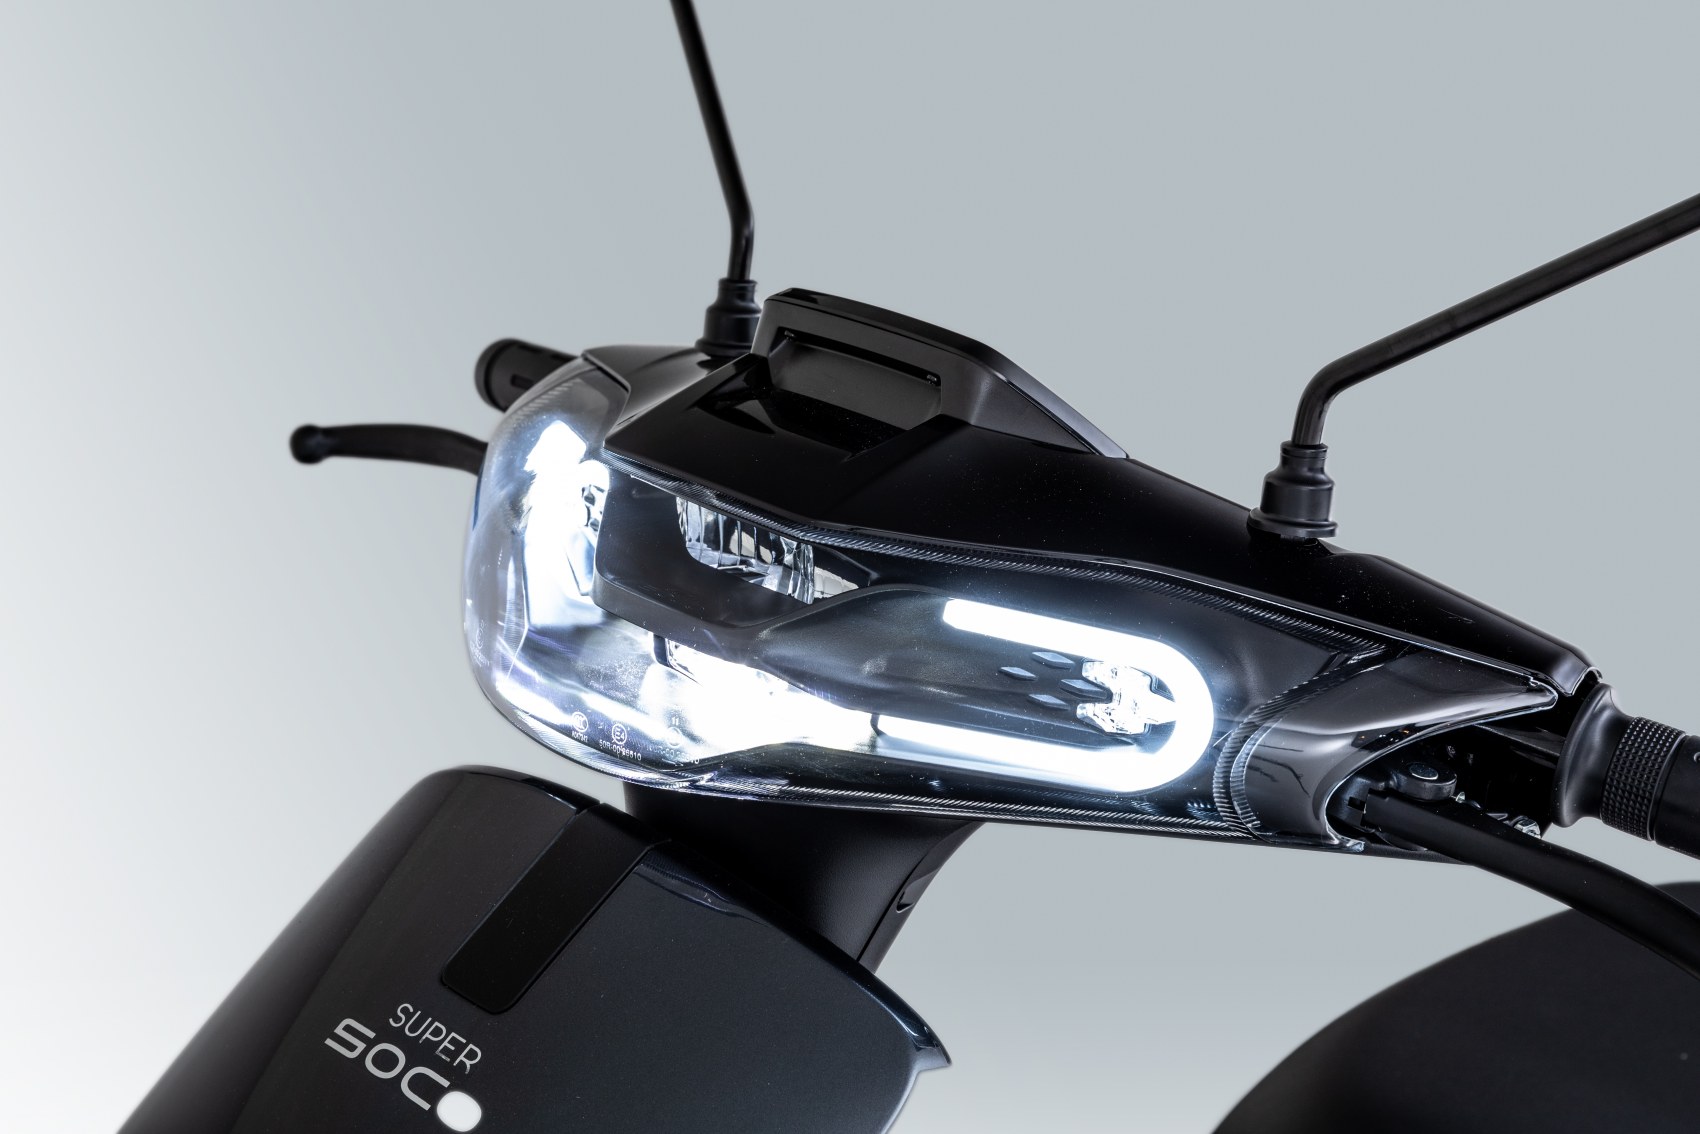 Super Soco CUx electric scooter headlight